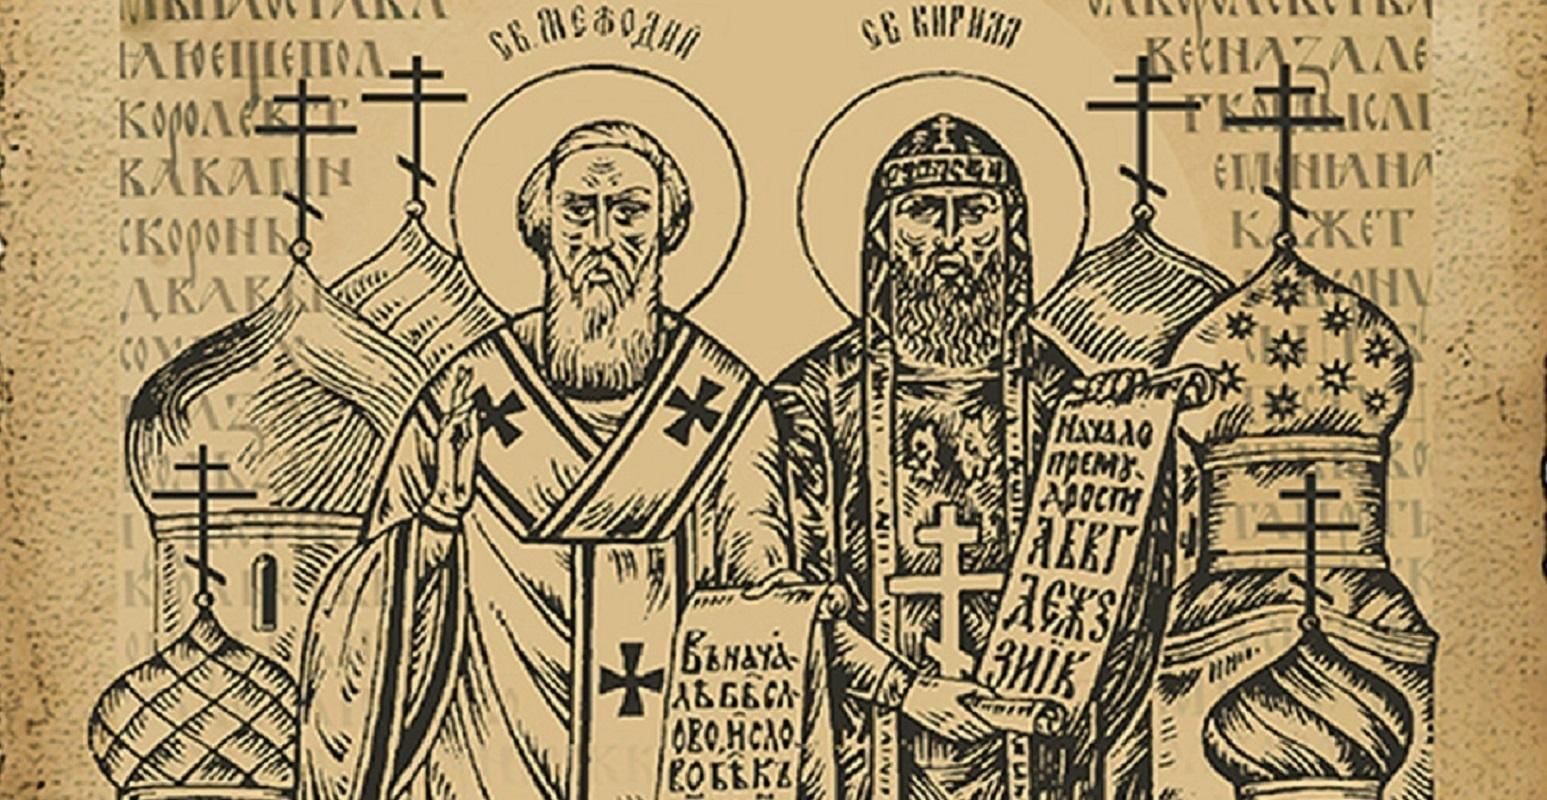 Кирилл (827-869) и Мефодий (815-885)